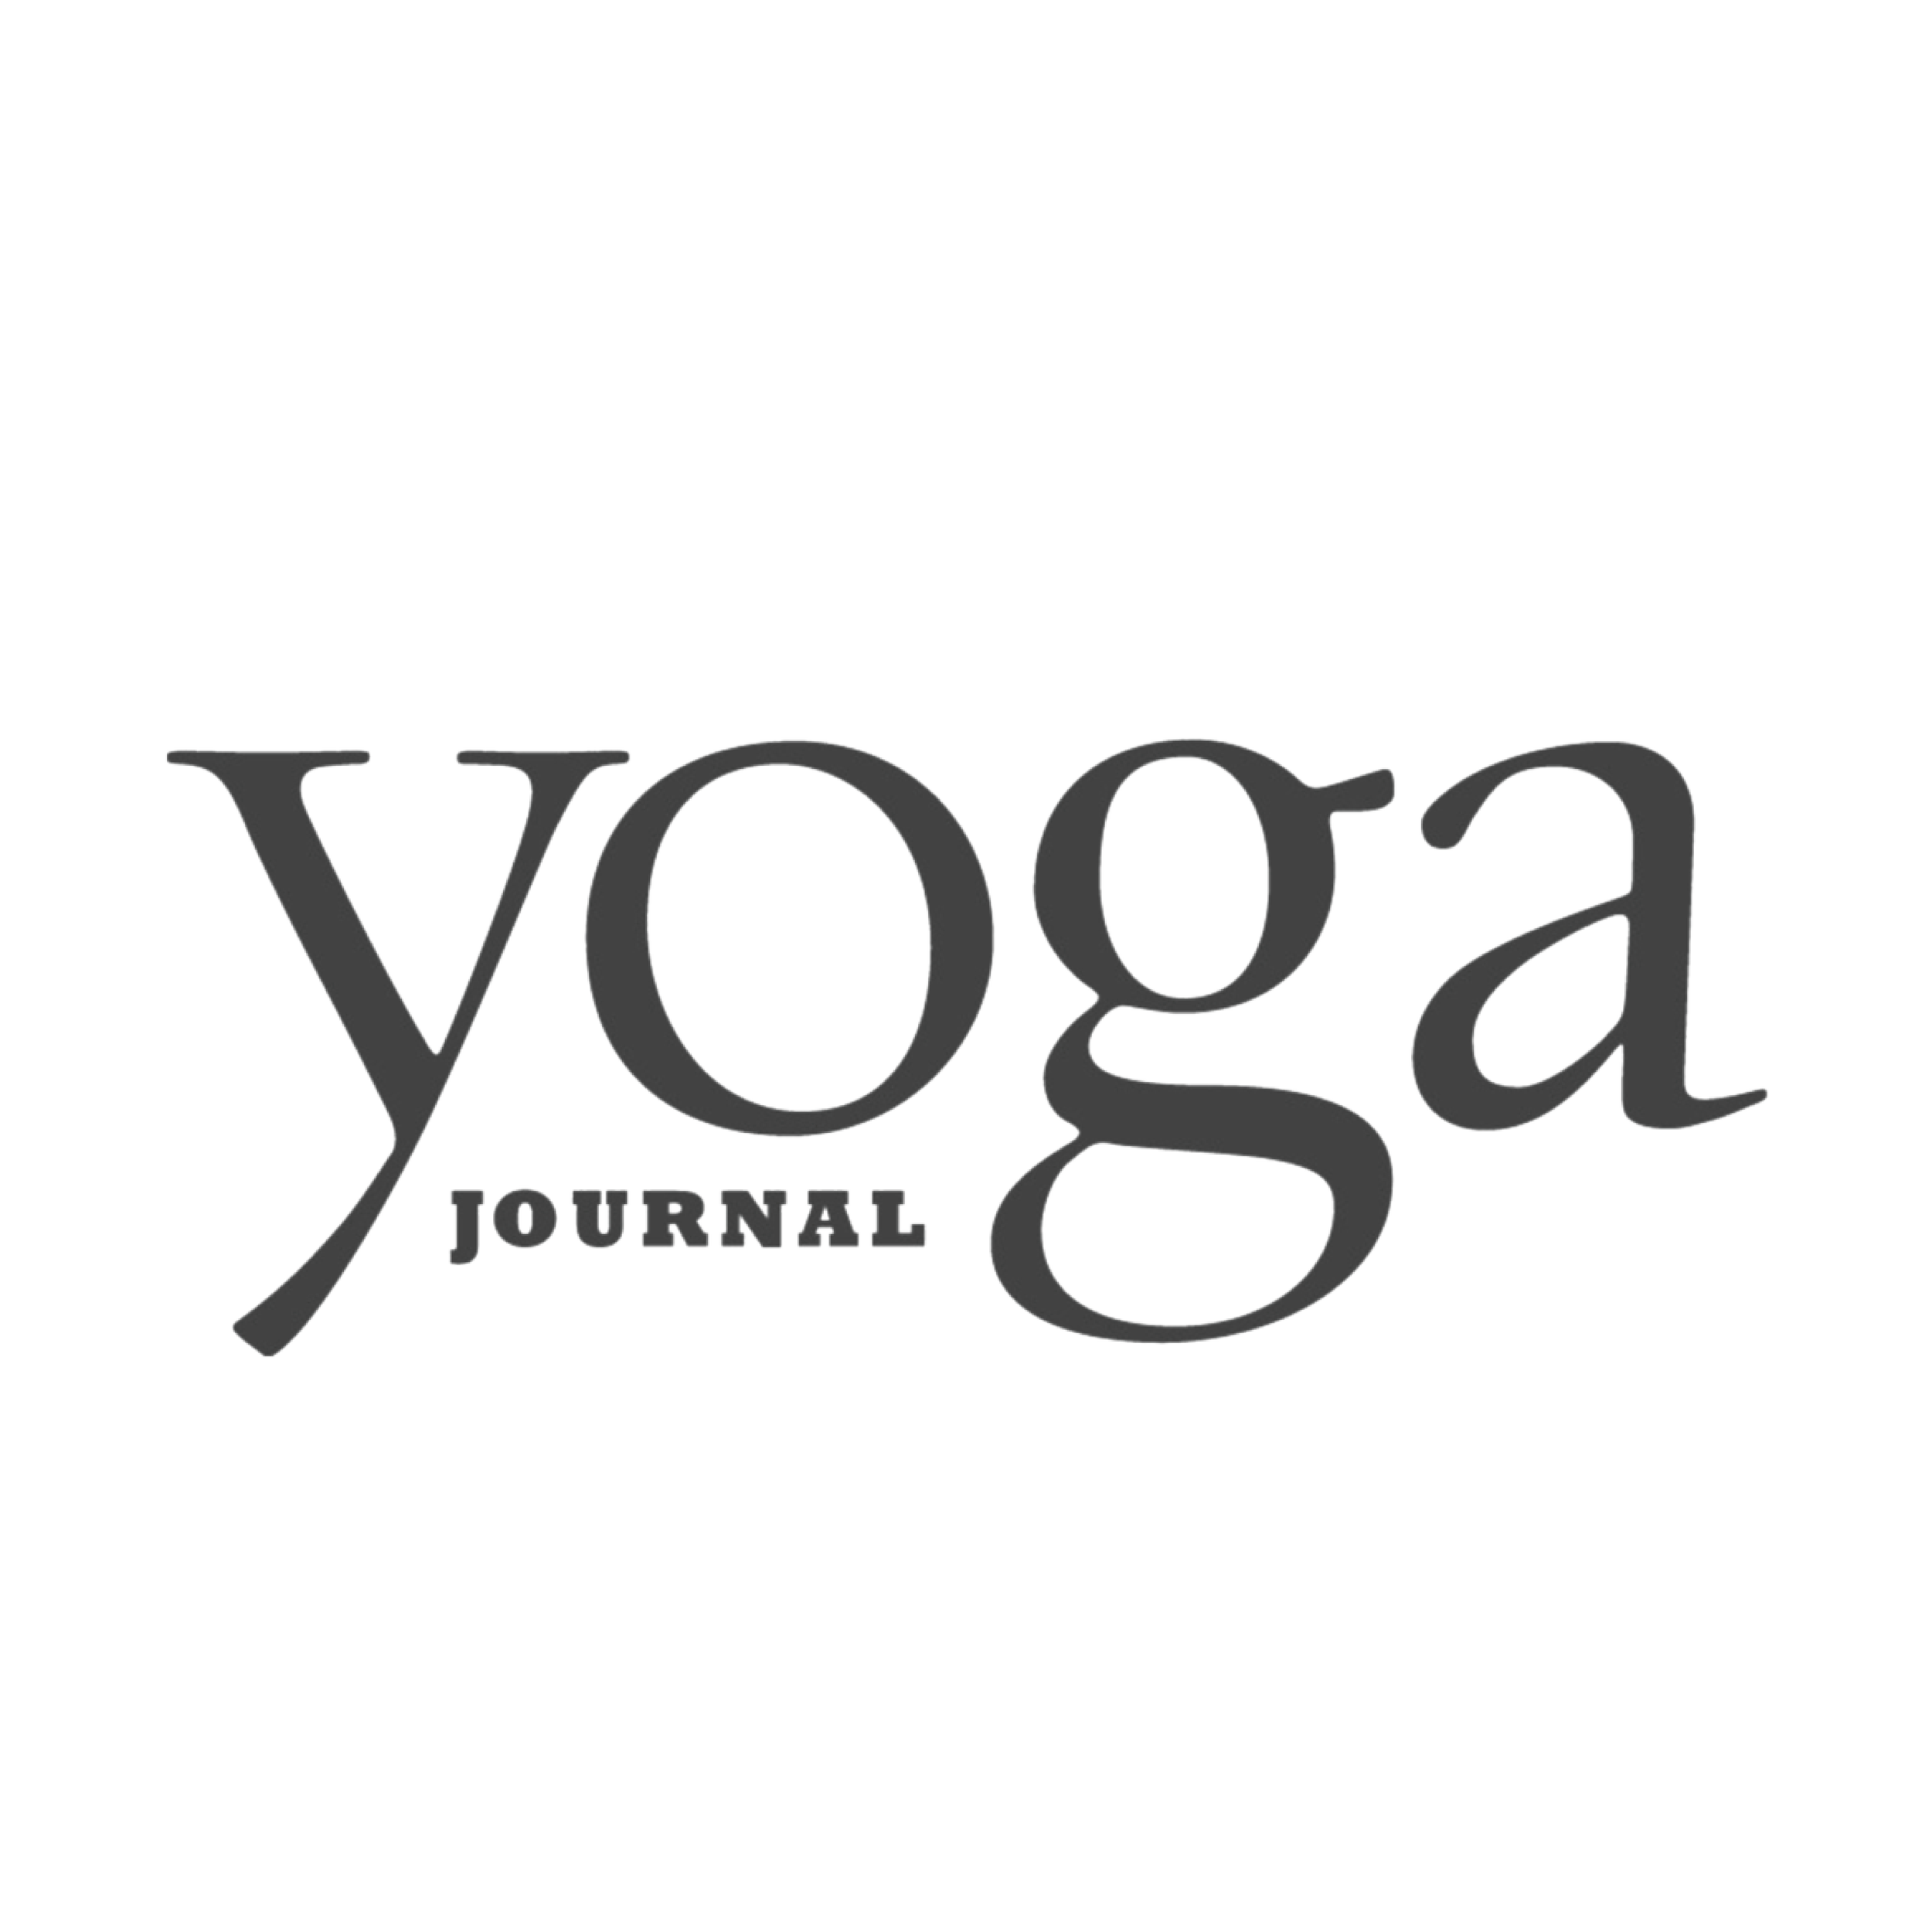 Yoga Journal logo (Copy)